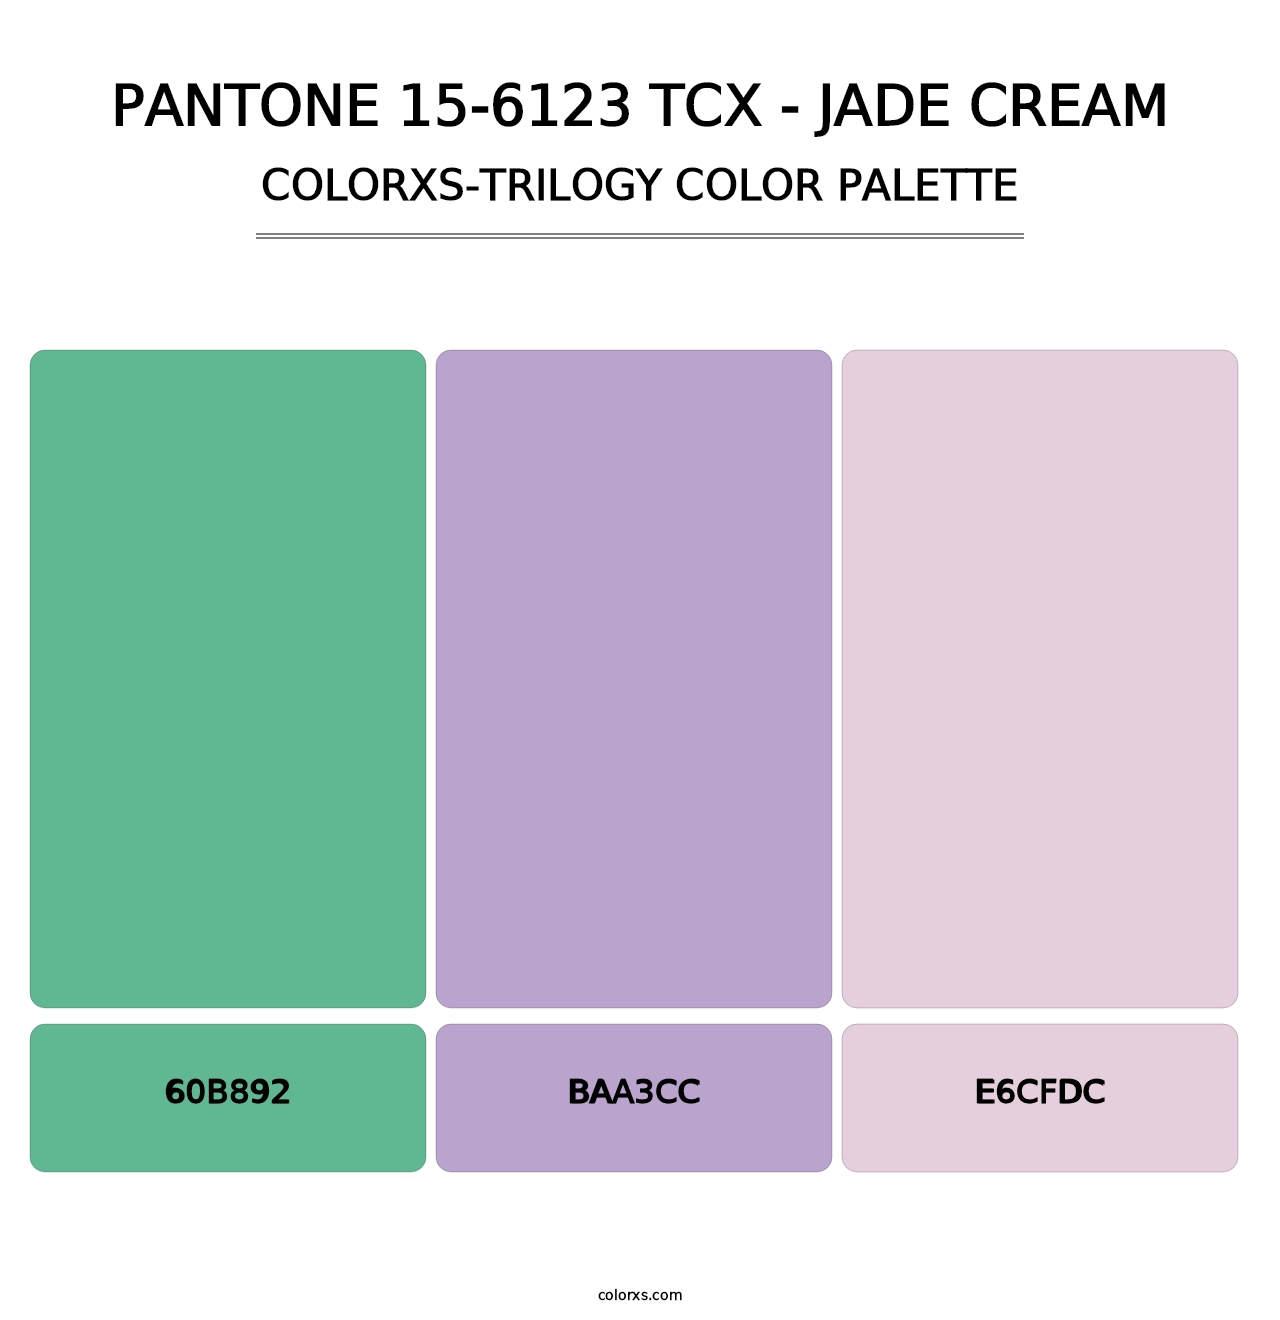 PANTONE 15-6123 TCX - Jade Cream - Colorxs Trilogy Palette